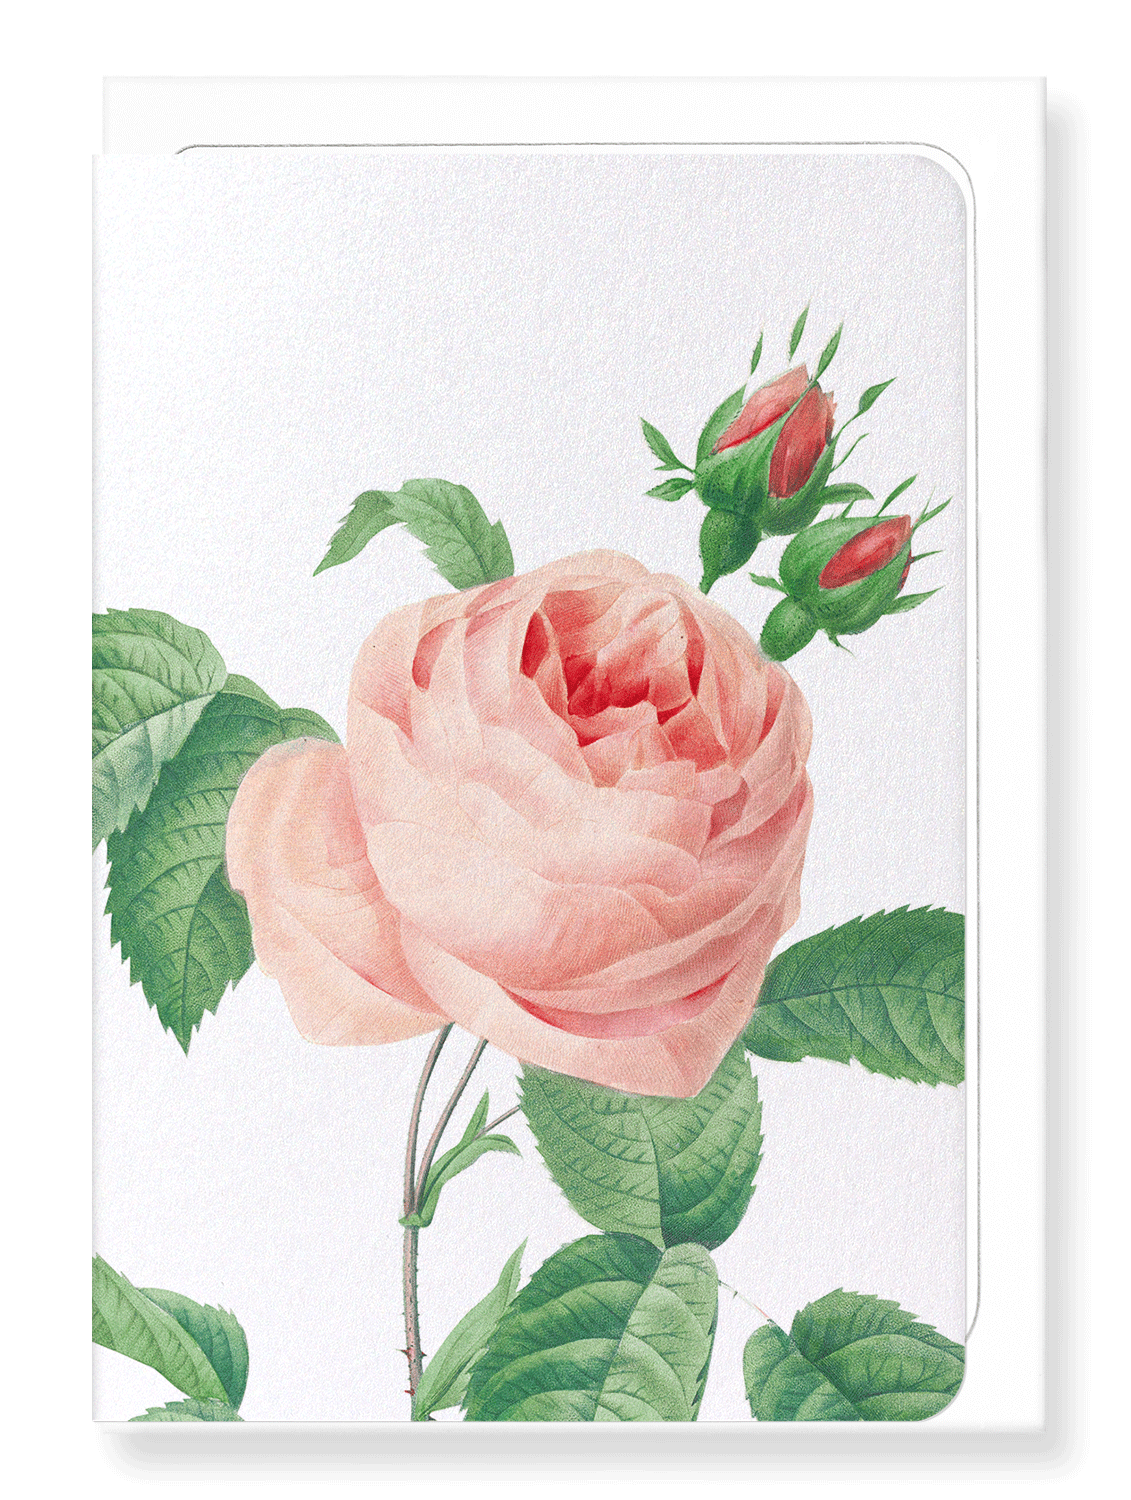 Ezen Designs - Pink rose No.2 (detail) - Greeting Card - Front